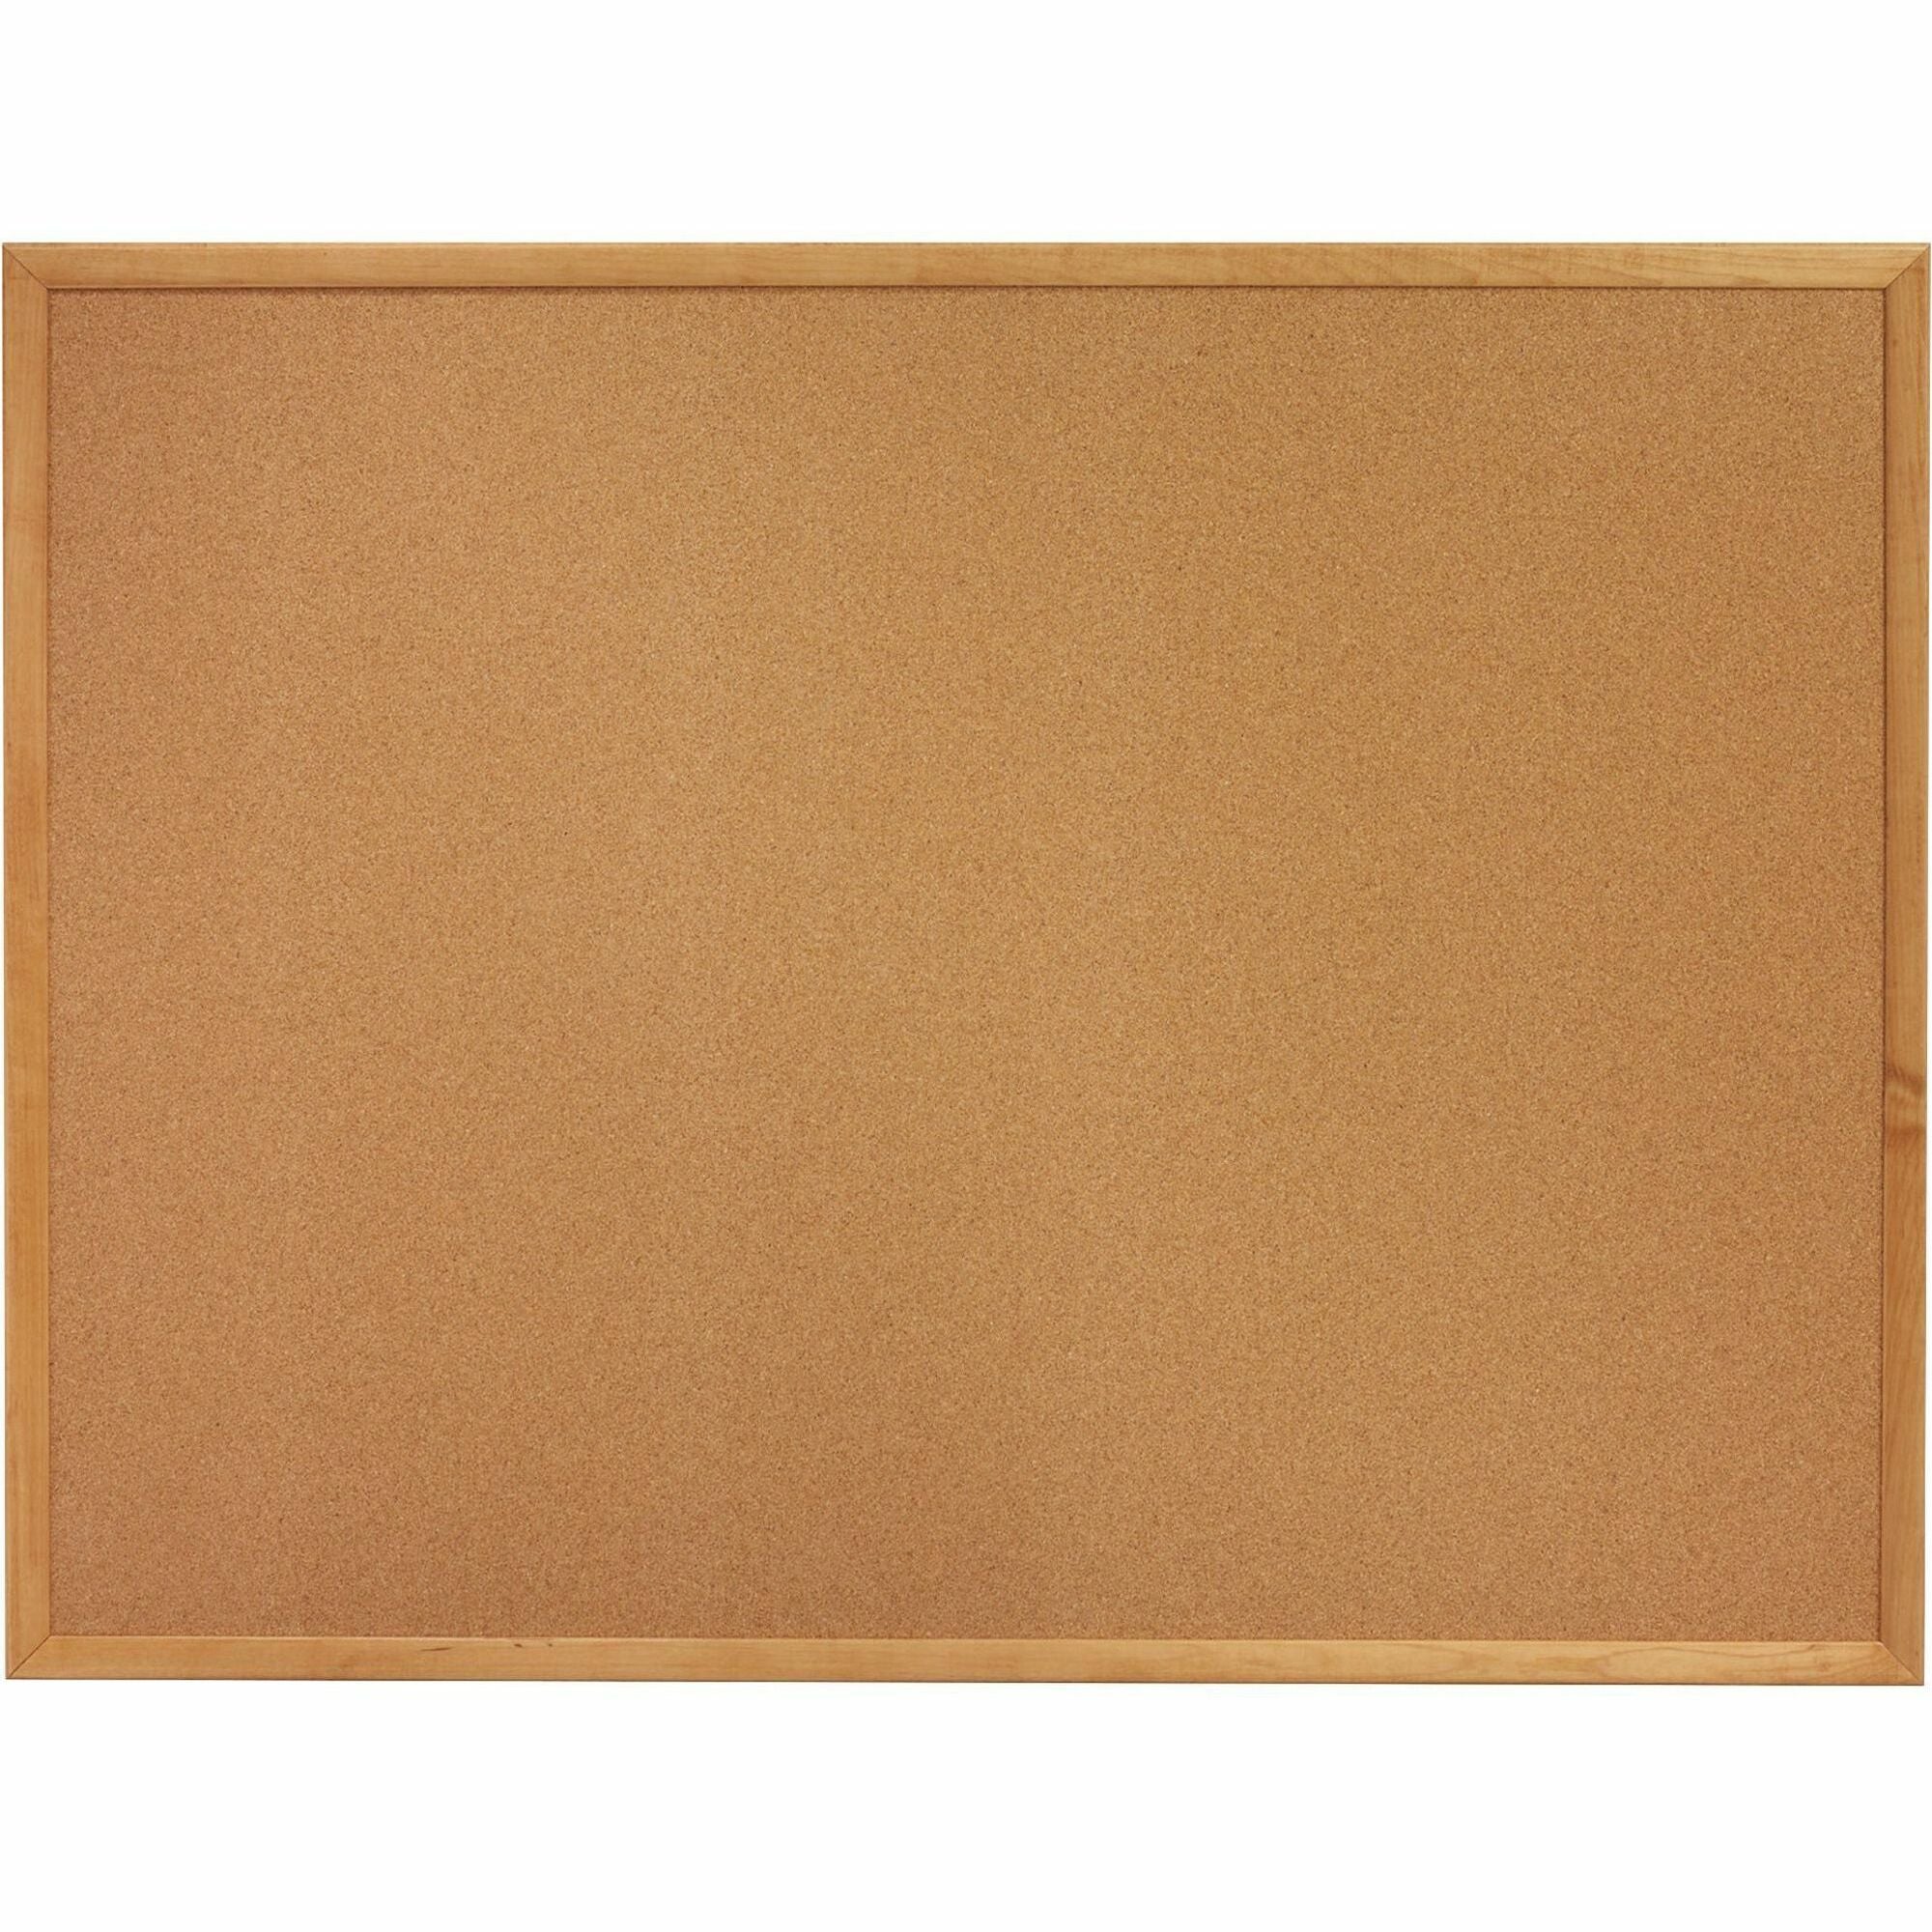 lorell-bulletin-board-24-height-x-36-width-cork-surface-long-lasting-warp-resistant-brown-oak-frame-1-each_llr19767 - 1